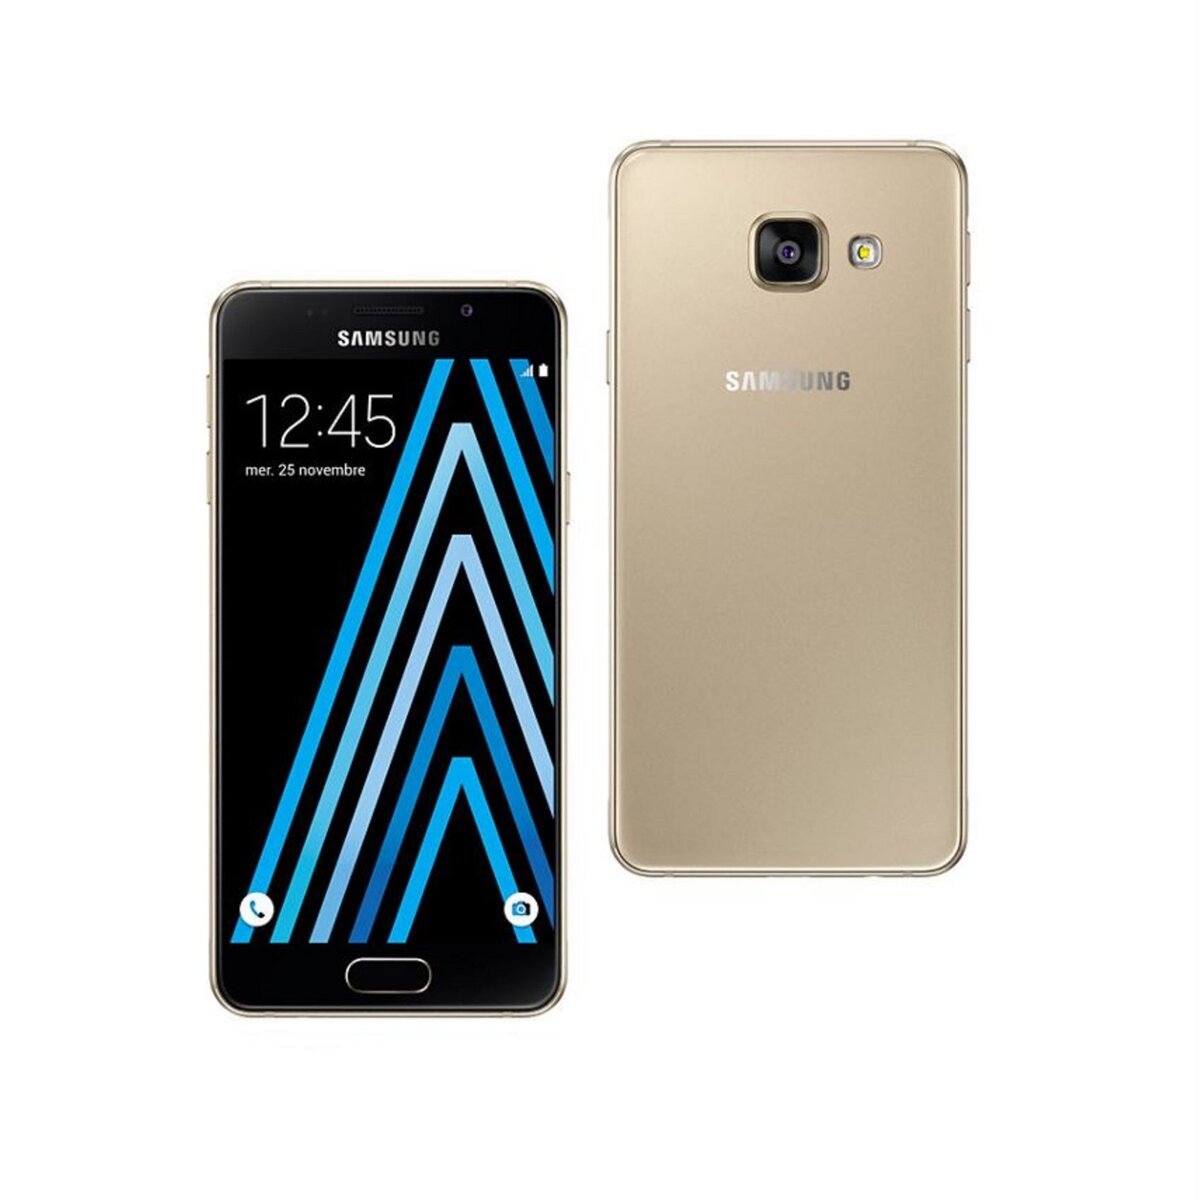 SAMSUNG Smartphone Galaxy A3 Edition 2016 - Gold